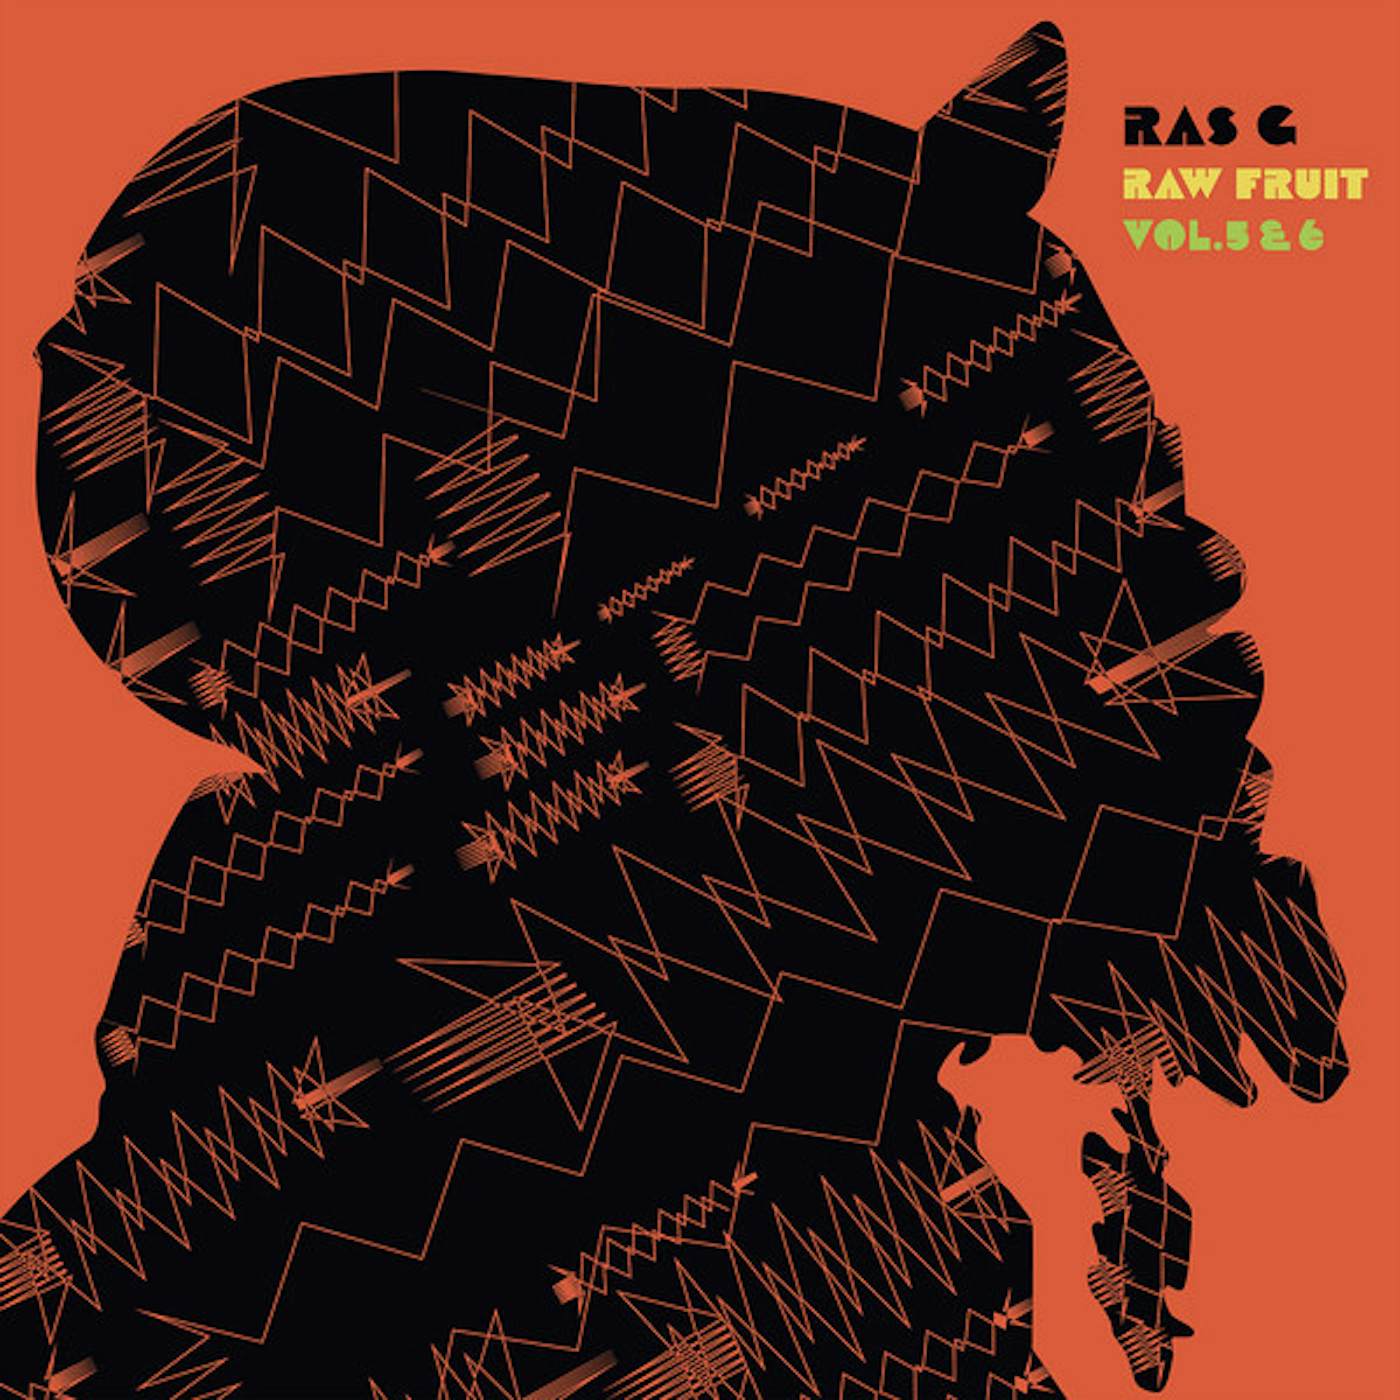 Ras G RAW FRUIT VOL. 5-6 Vinyl Record